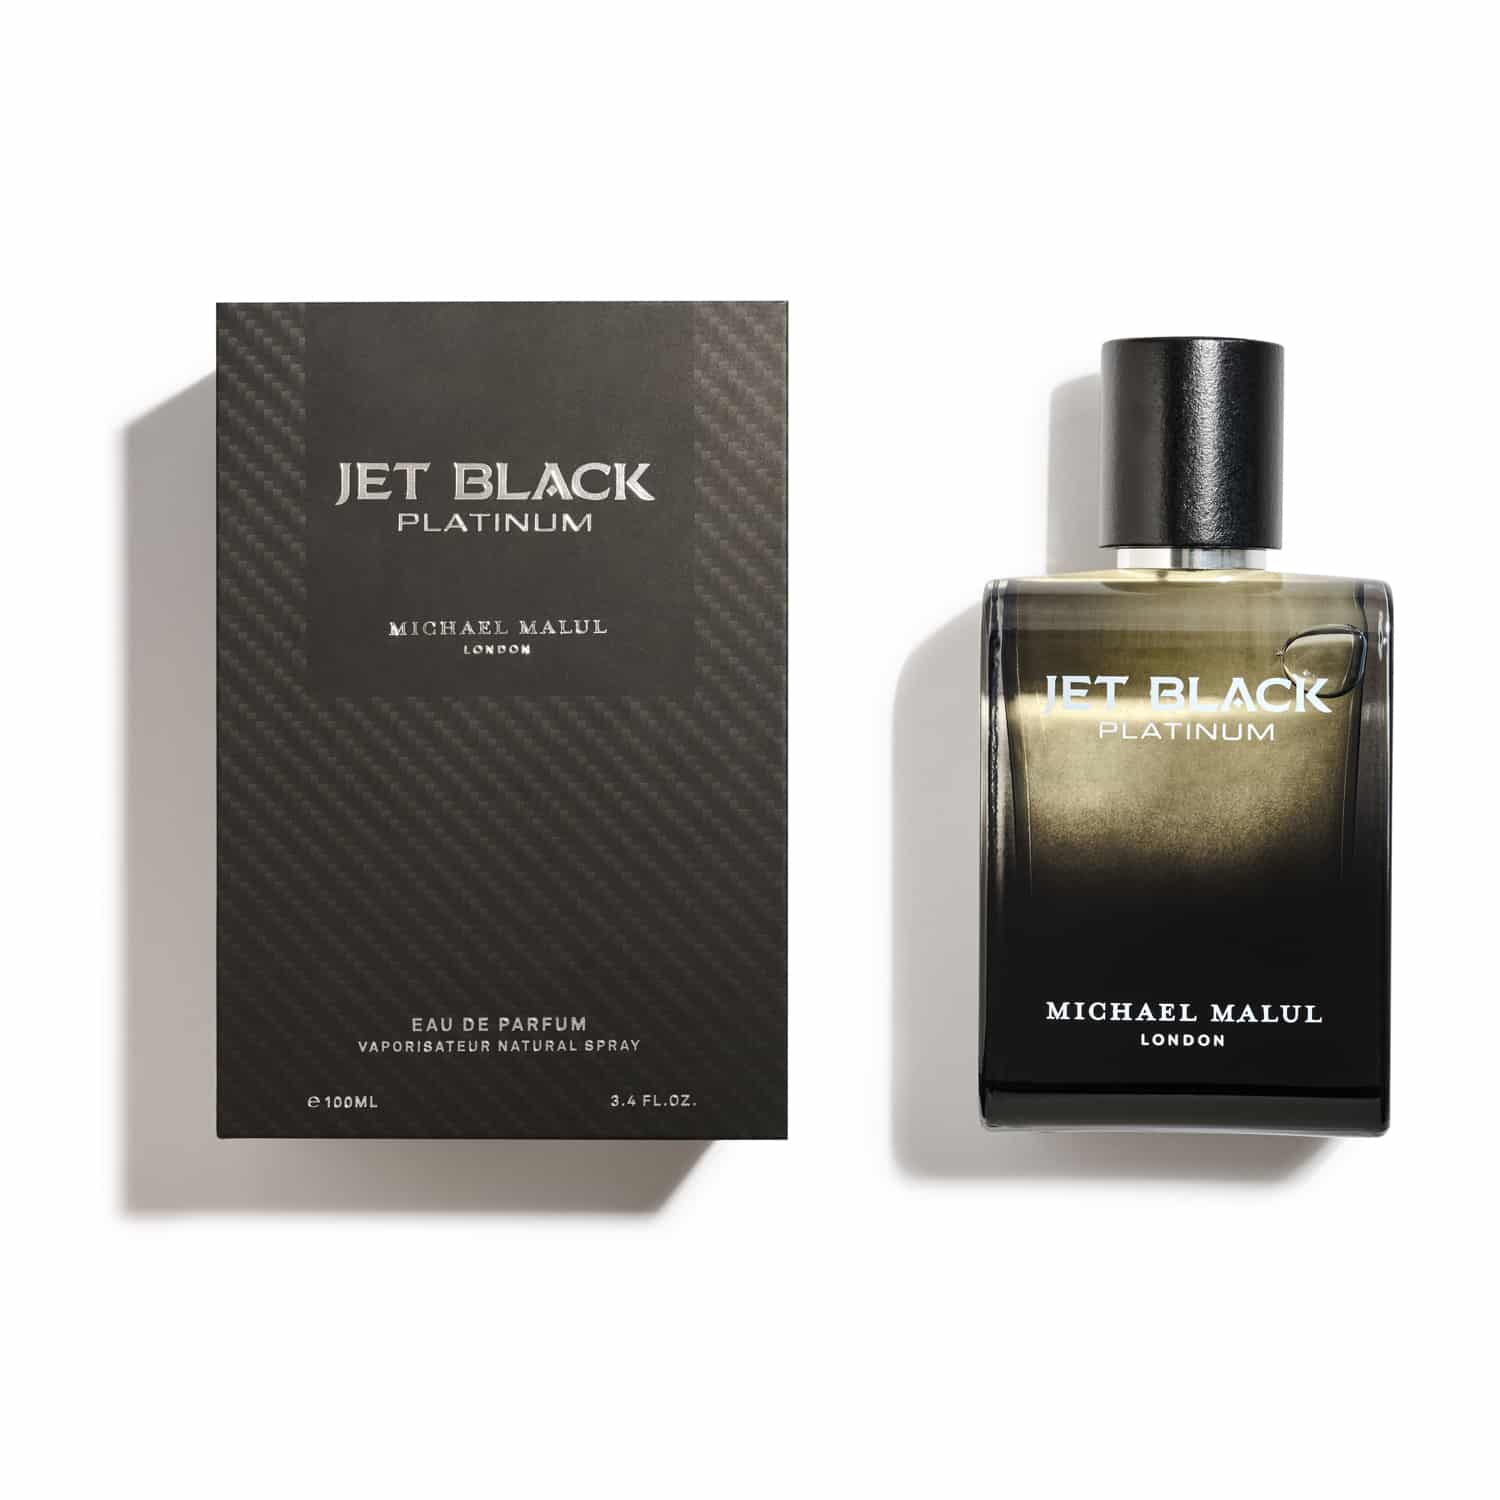 Jet Black Platinum – Michael Malul